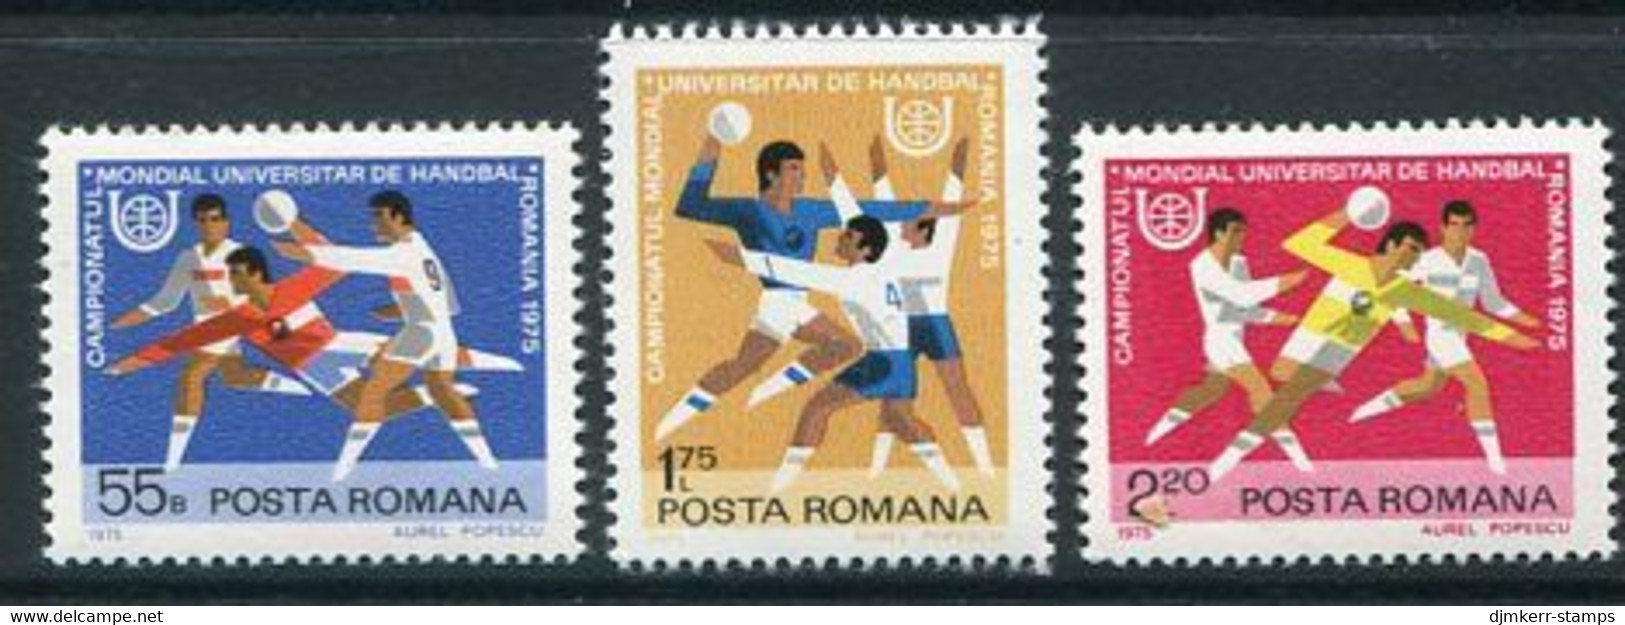 ROMANIA 1975 Student Handball Championship MNH  / **.  Michel 3244-49 - Ongebruikt